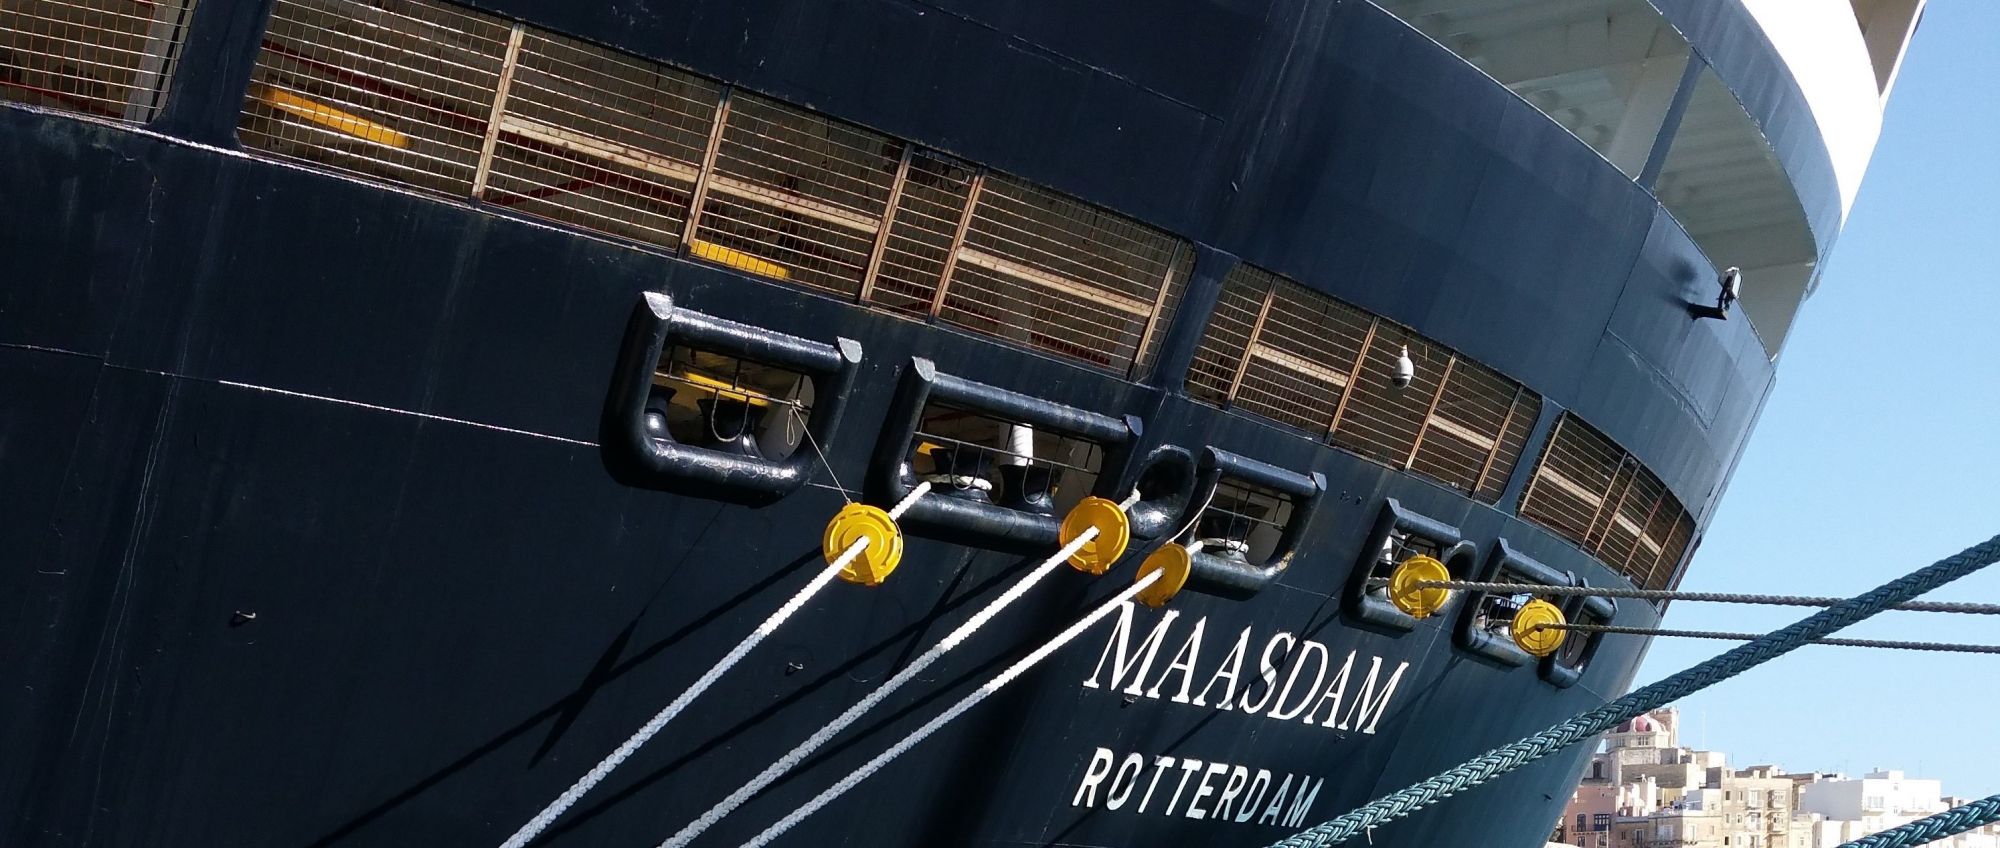 Repair bow thruster Maasdam